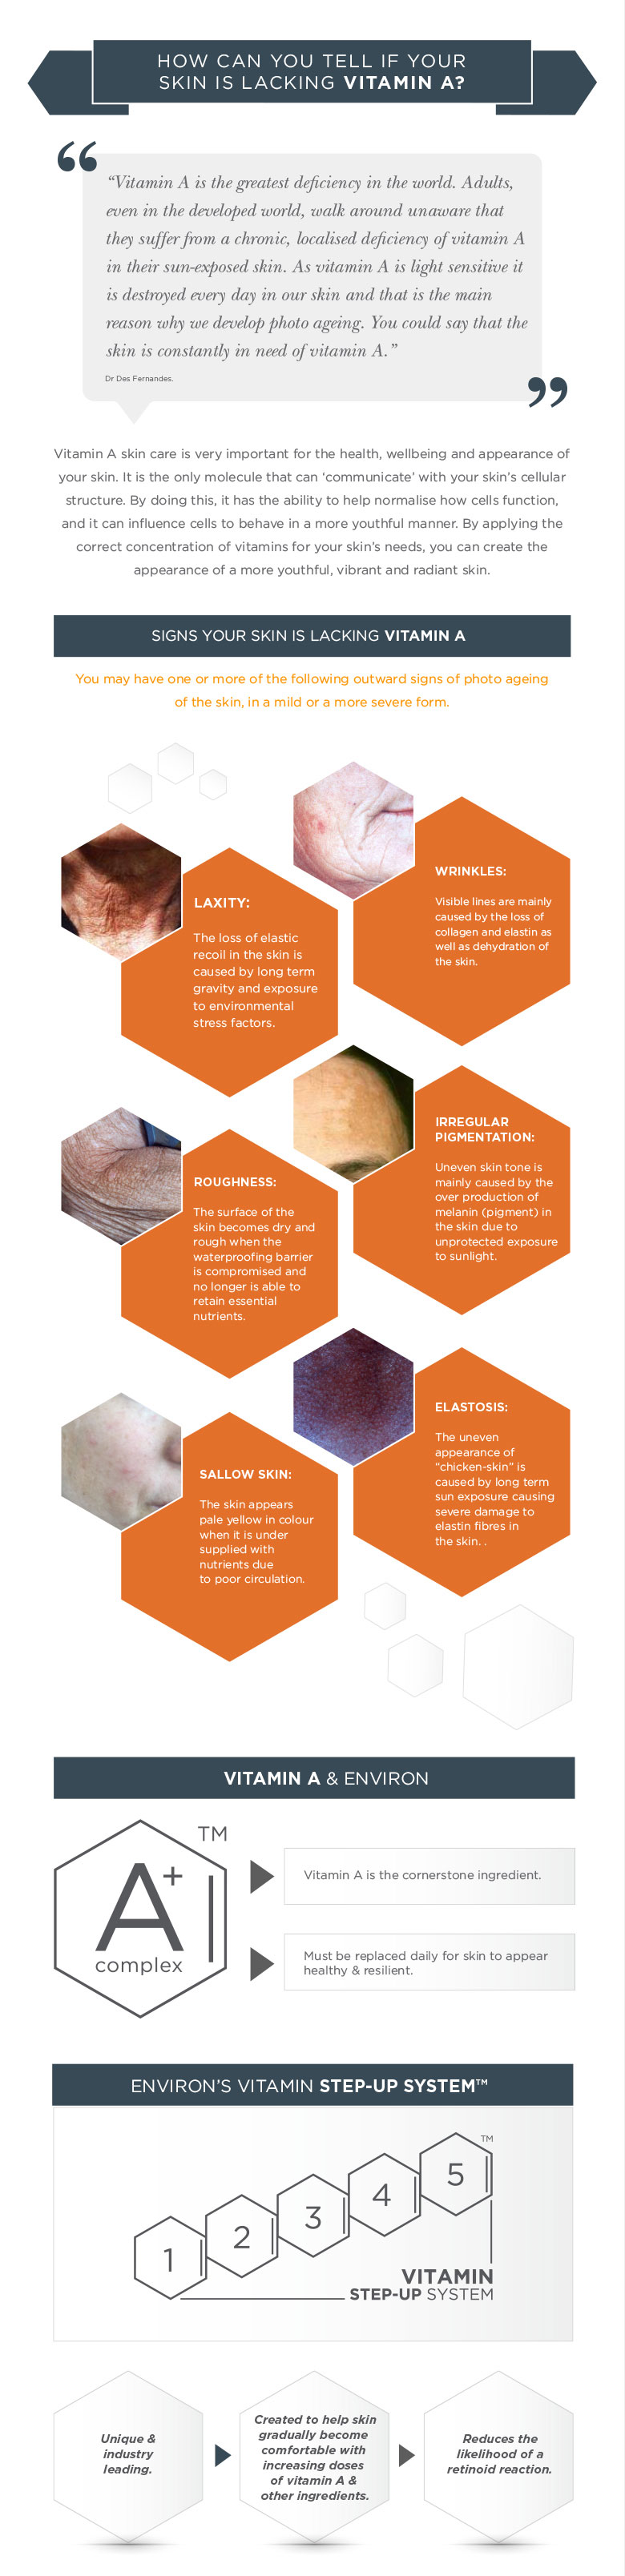 Vitamin-A Skin Care Infographic | Environ Skin Care